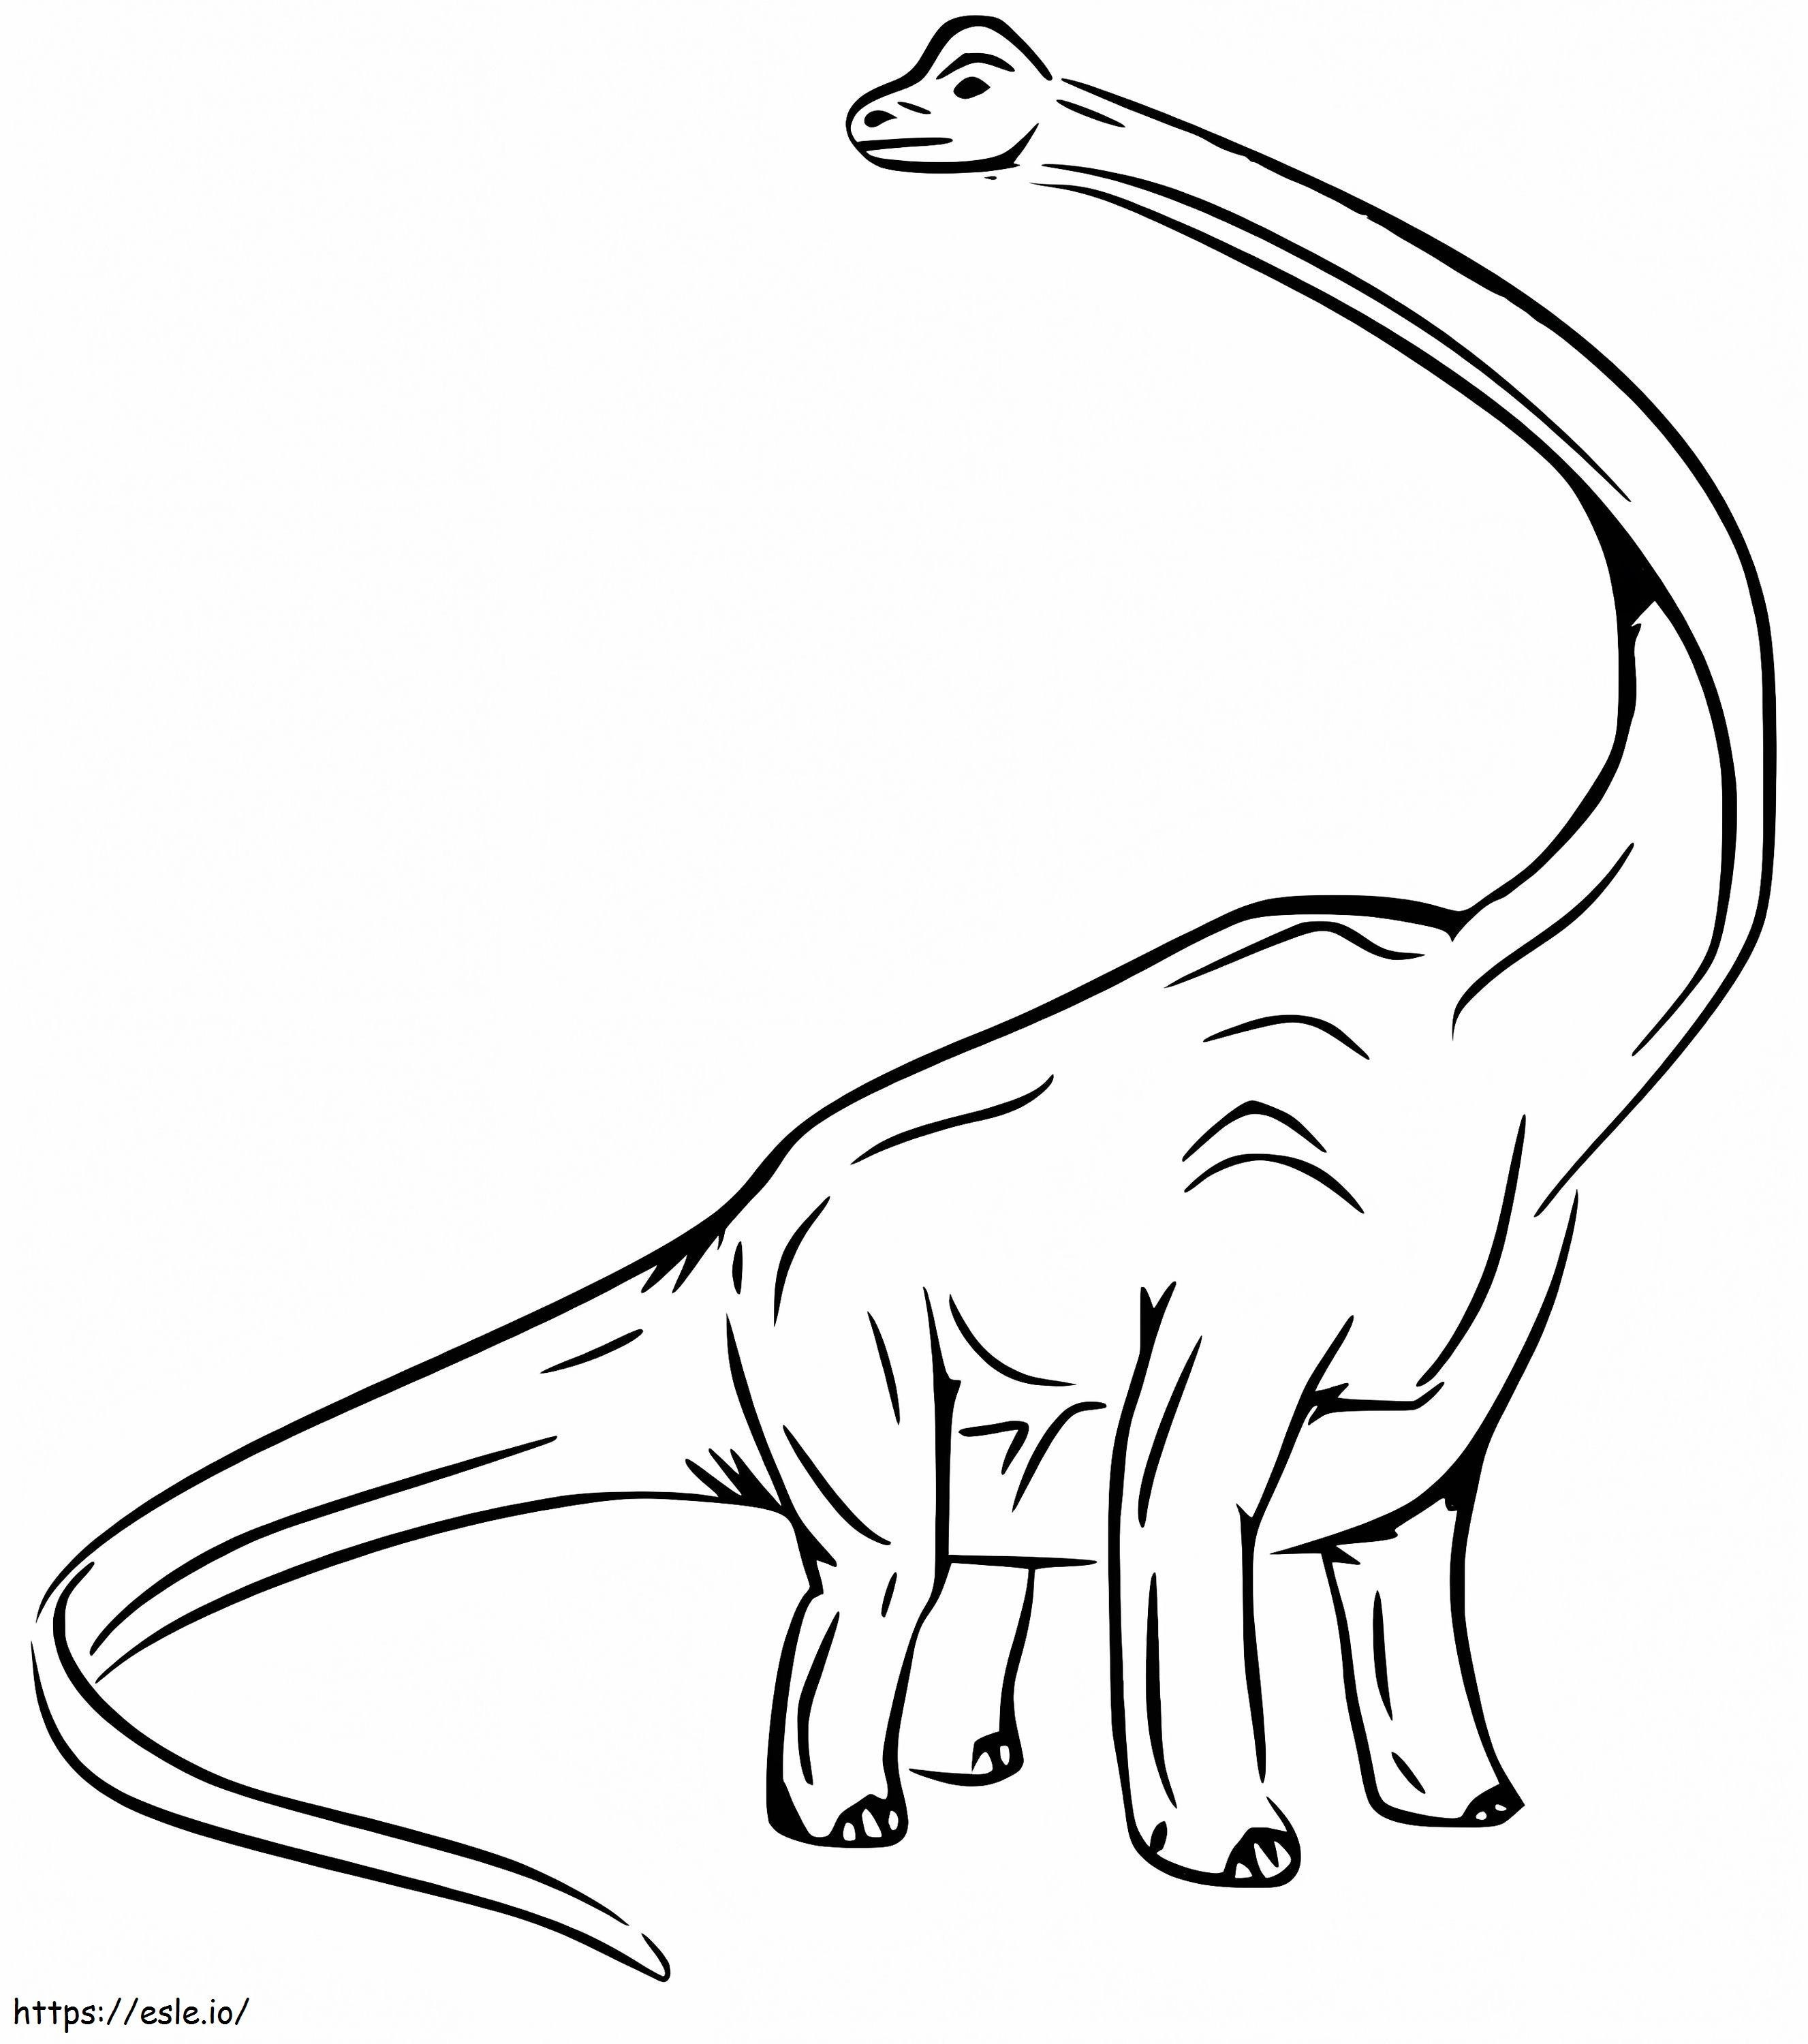 Riesiger Brachiosaurus ausmalbilder